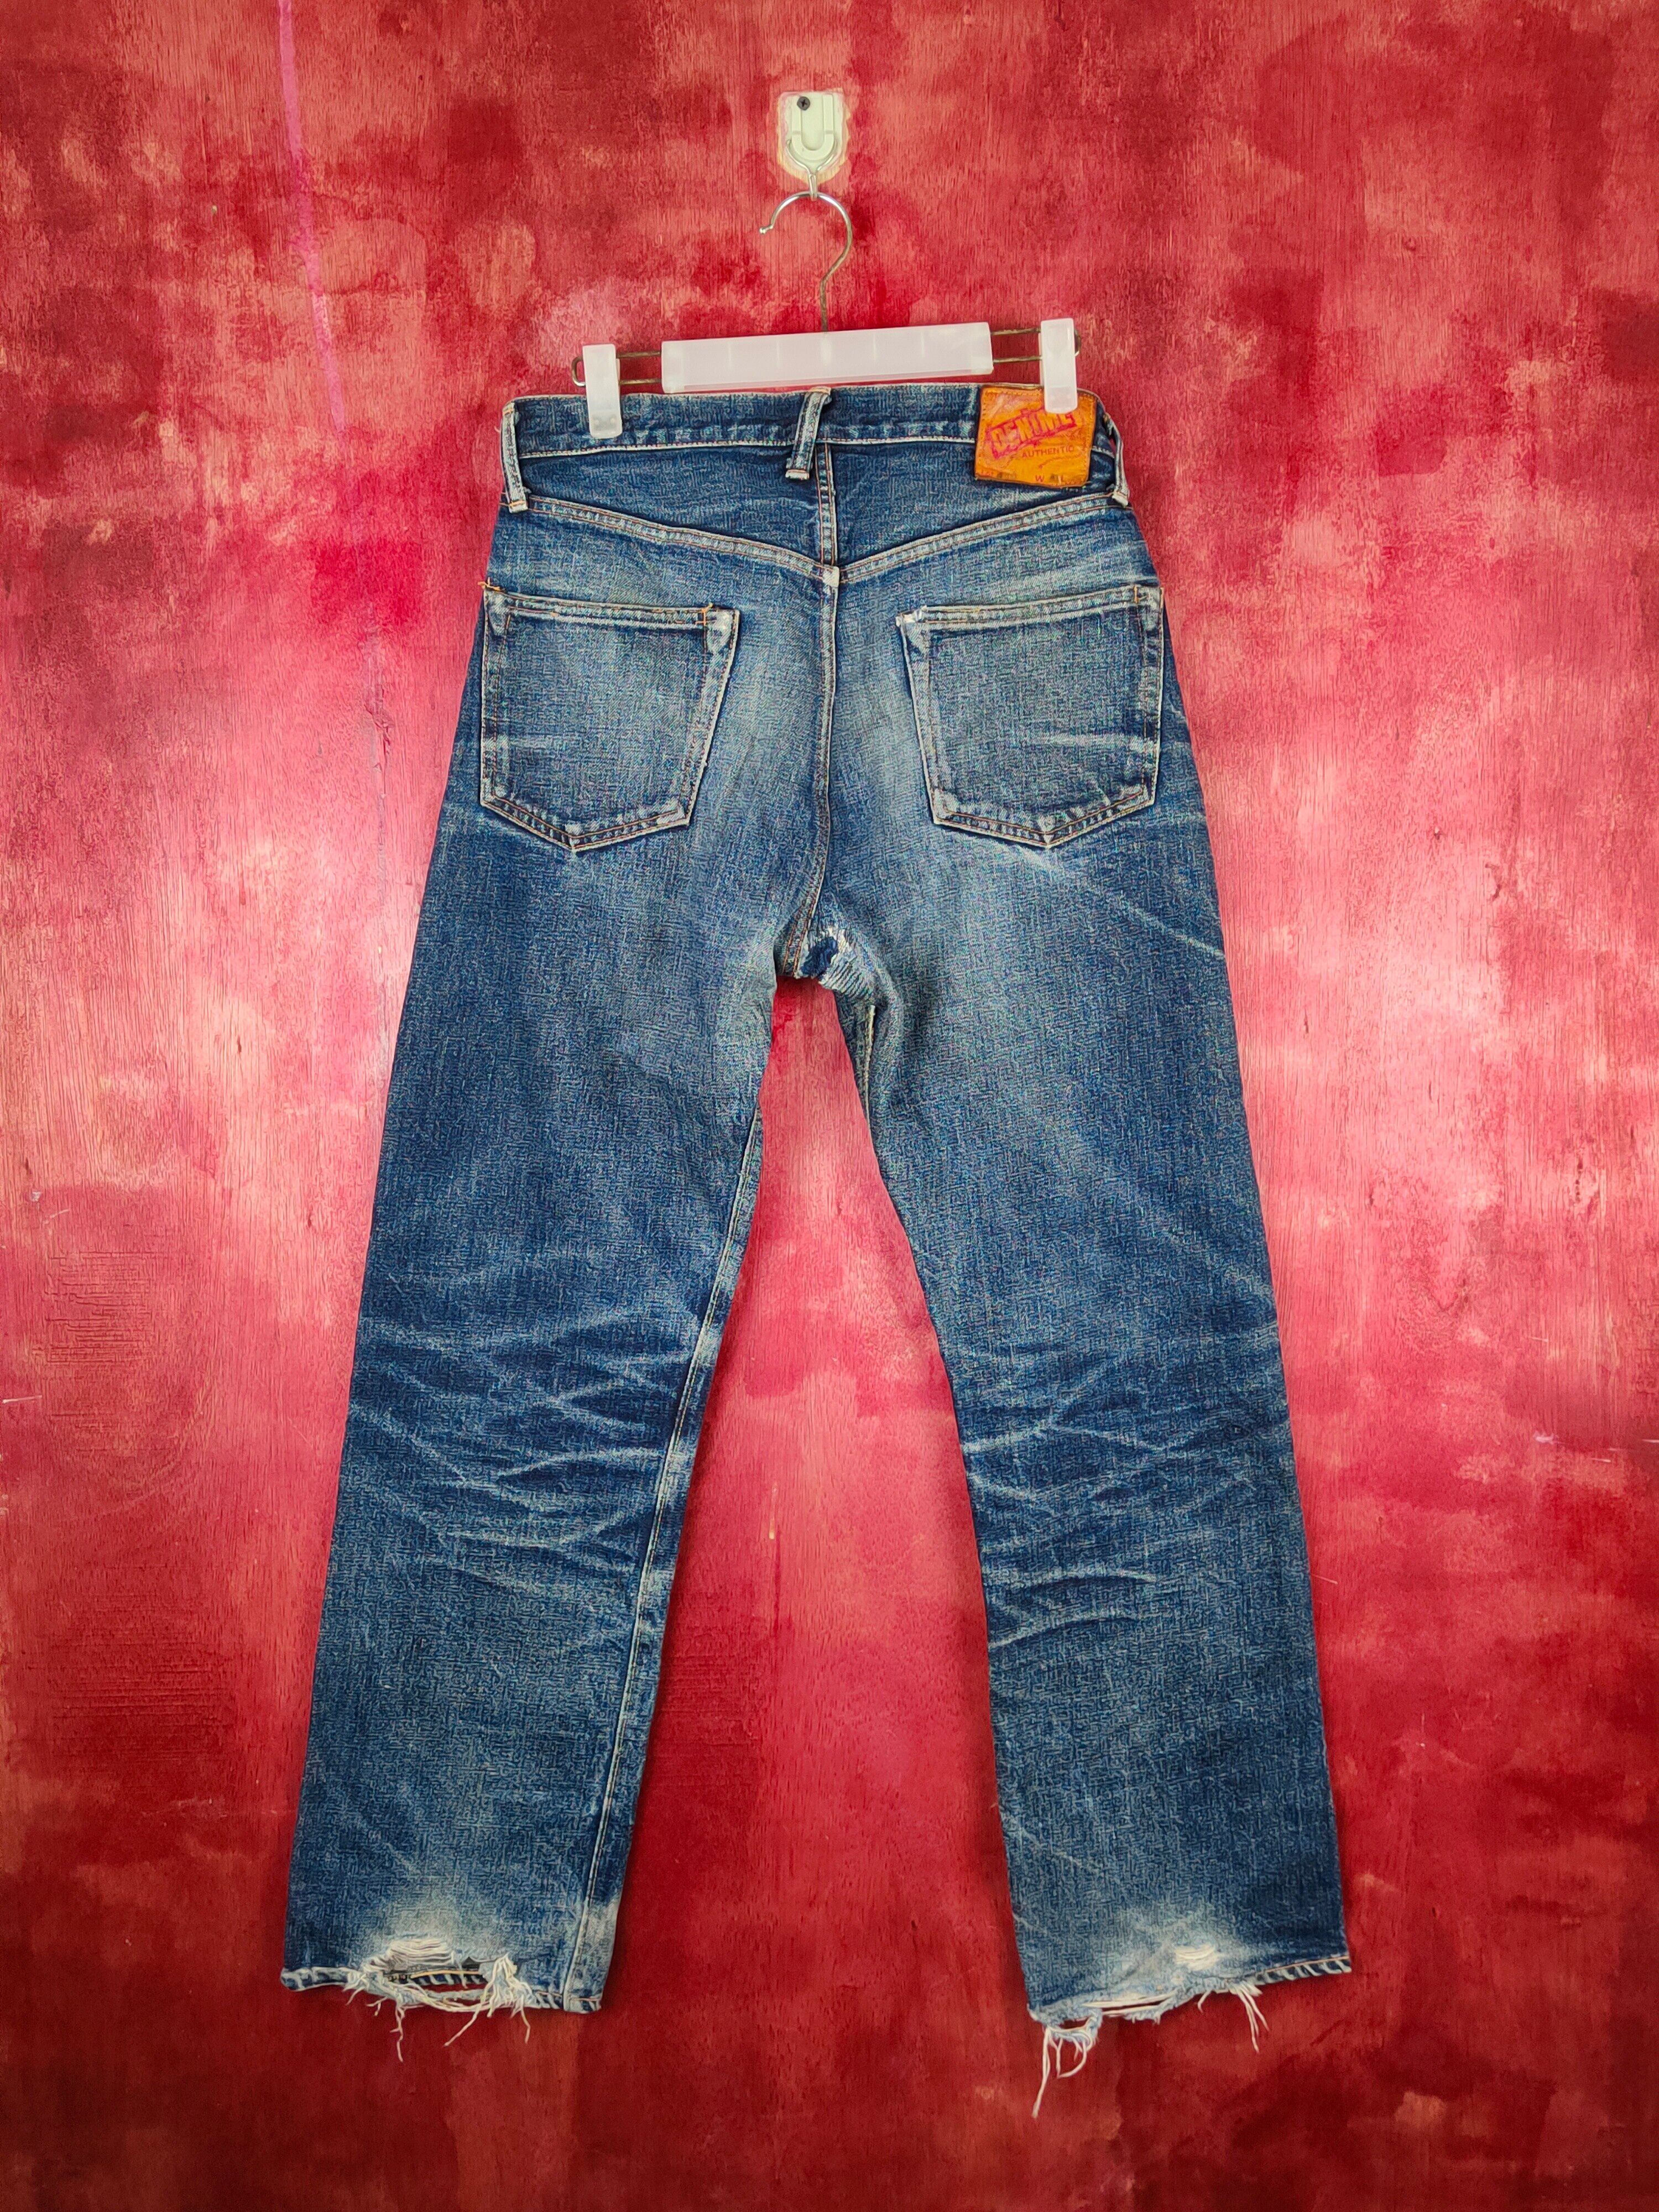 Vintage Denime Japan Vintage Distressed Ripped Jeans #S1705 Size US 31 - 8 Thumbnail